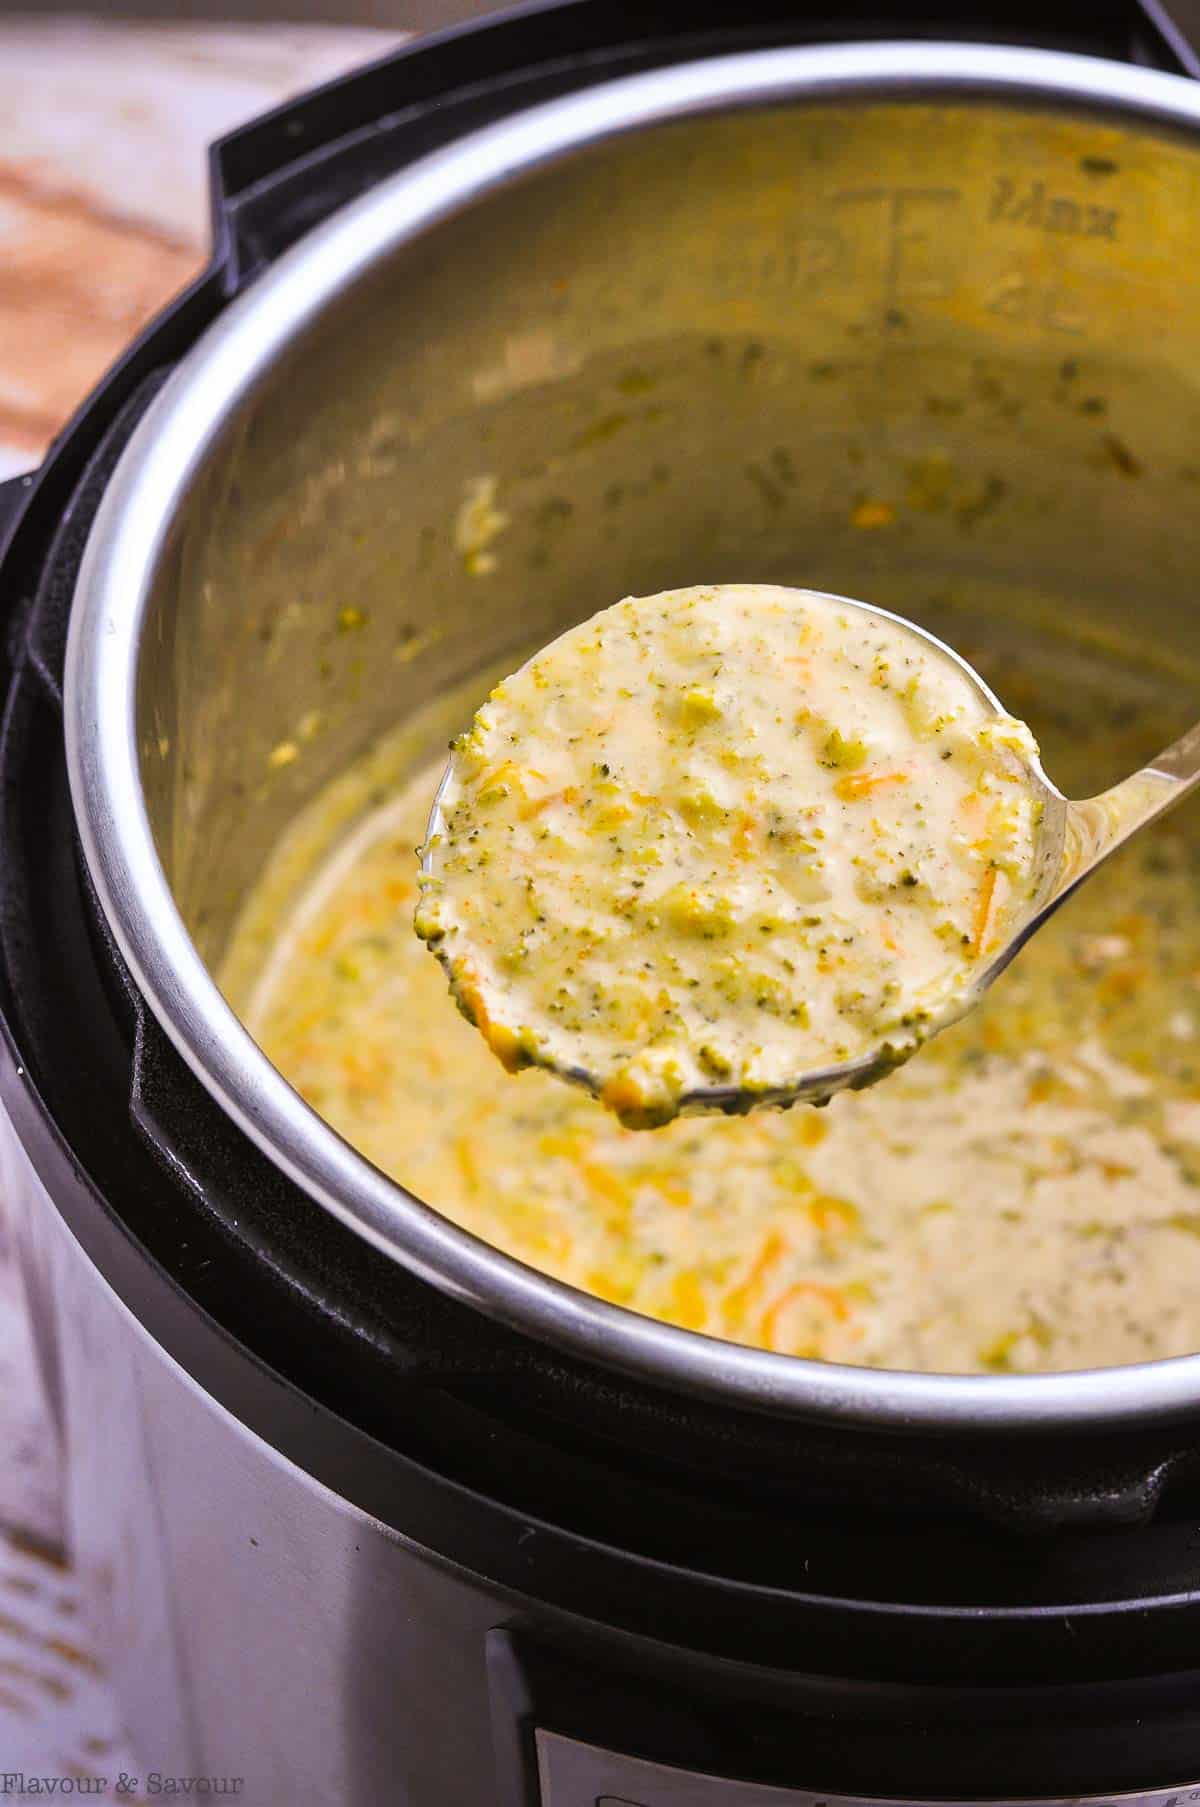 A ladleful of Broccoli Cheddar Soup